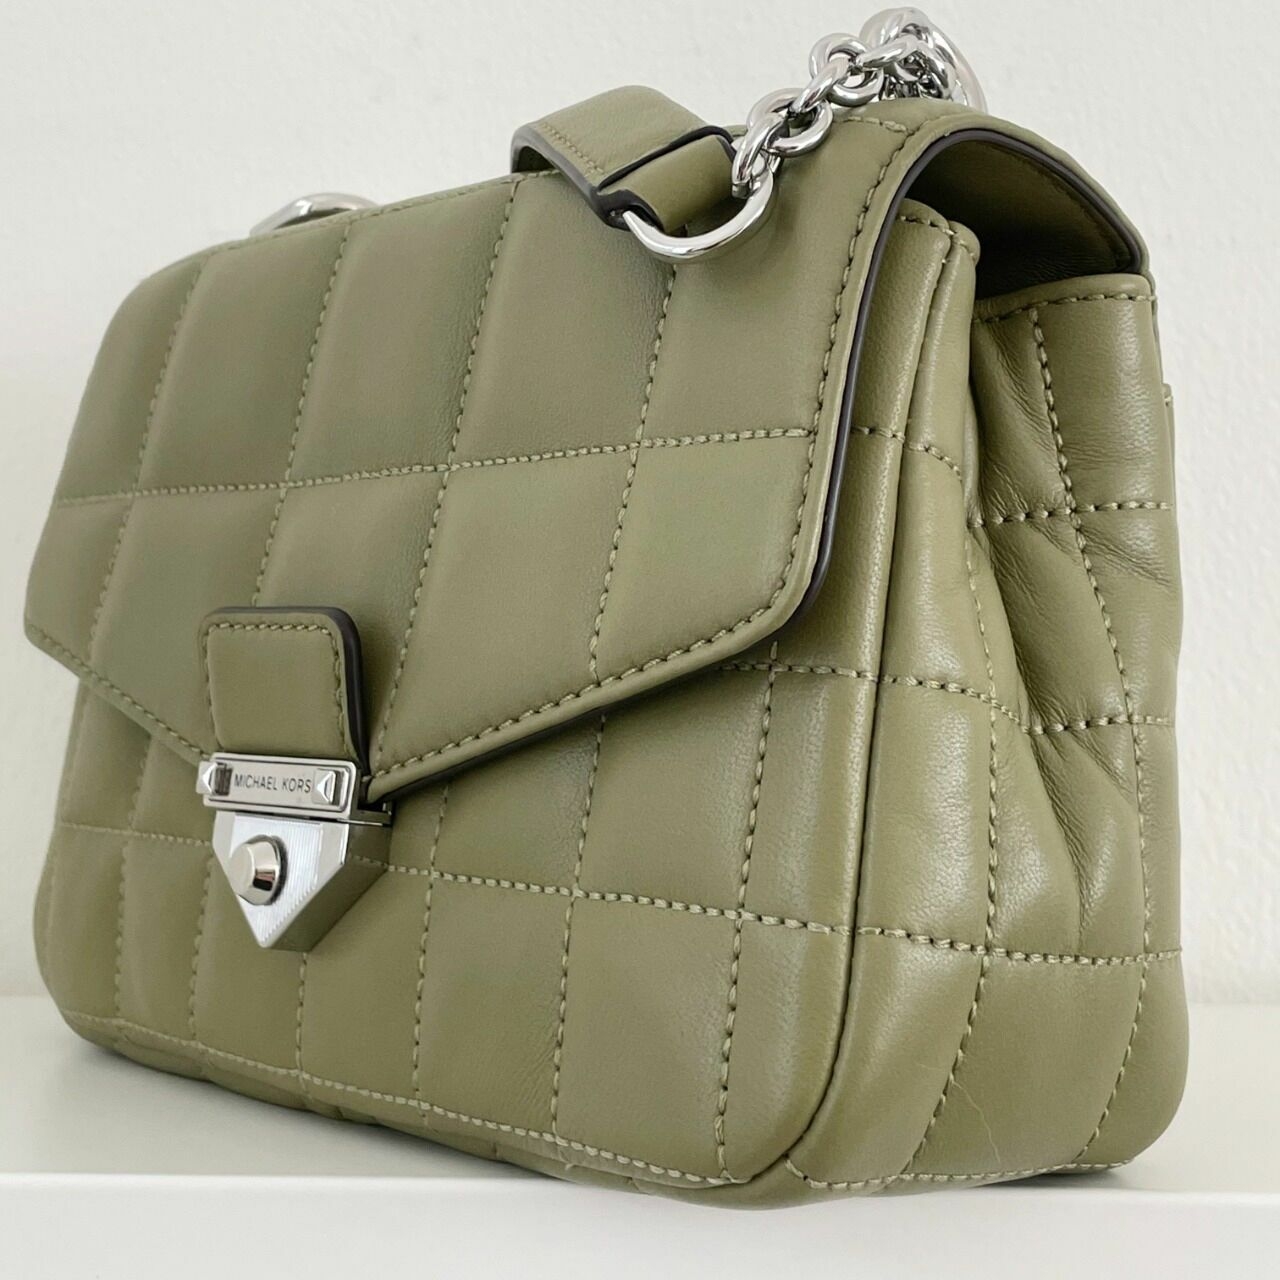 Michael Kors SoHo Quilted Handbag - Olive